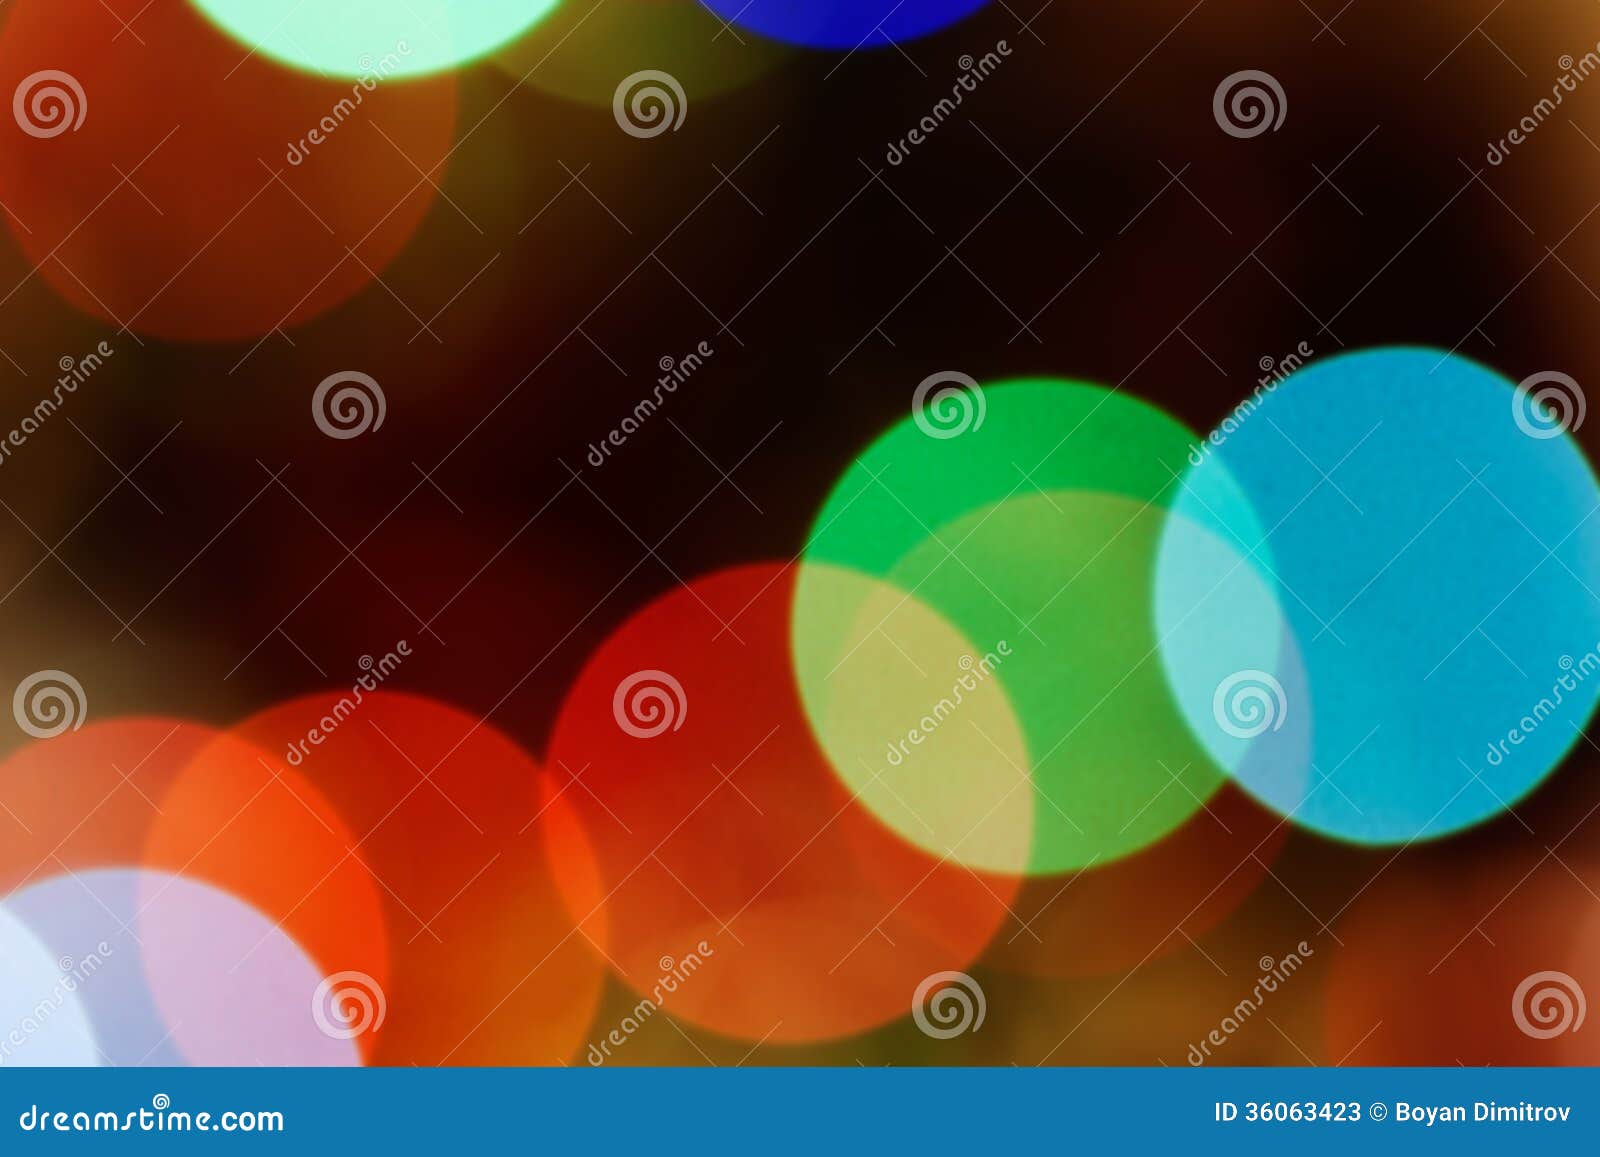 colorful-bokeh-abstract-defocused-background-blurred-christmas-lights-36063423.jpg